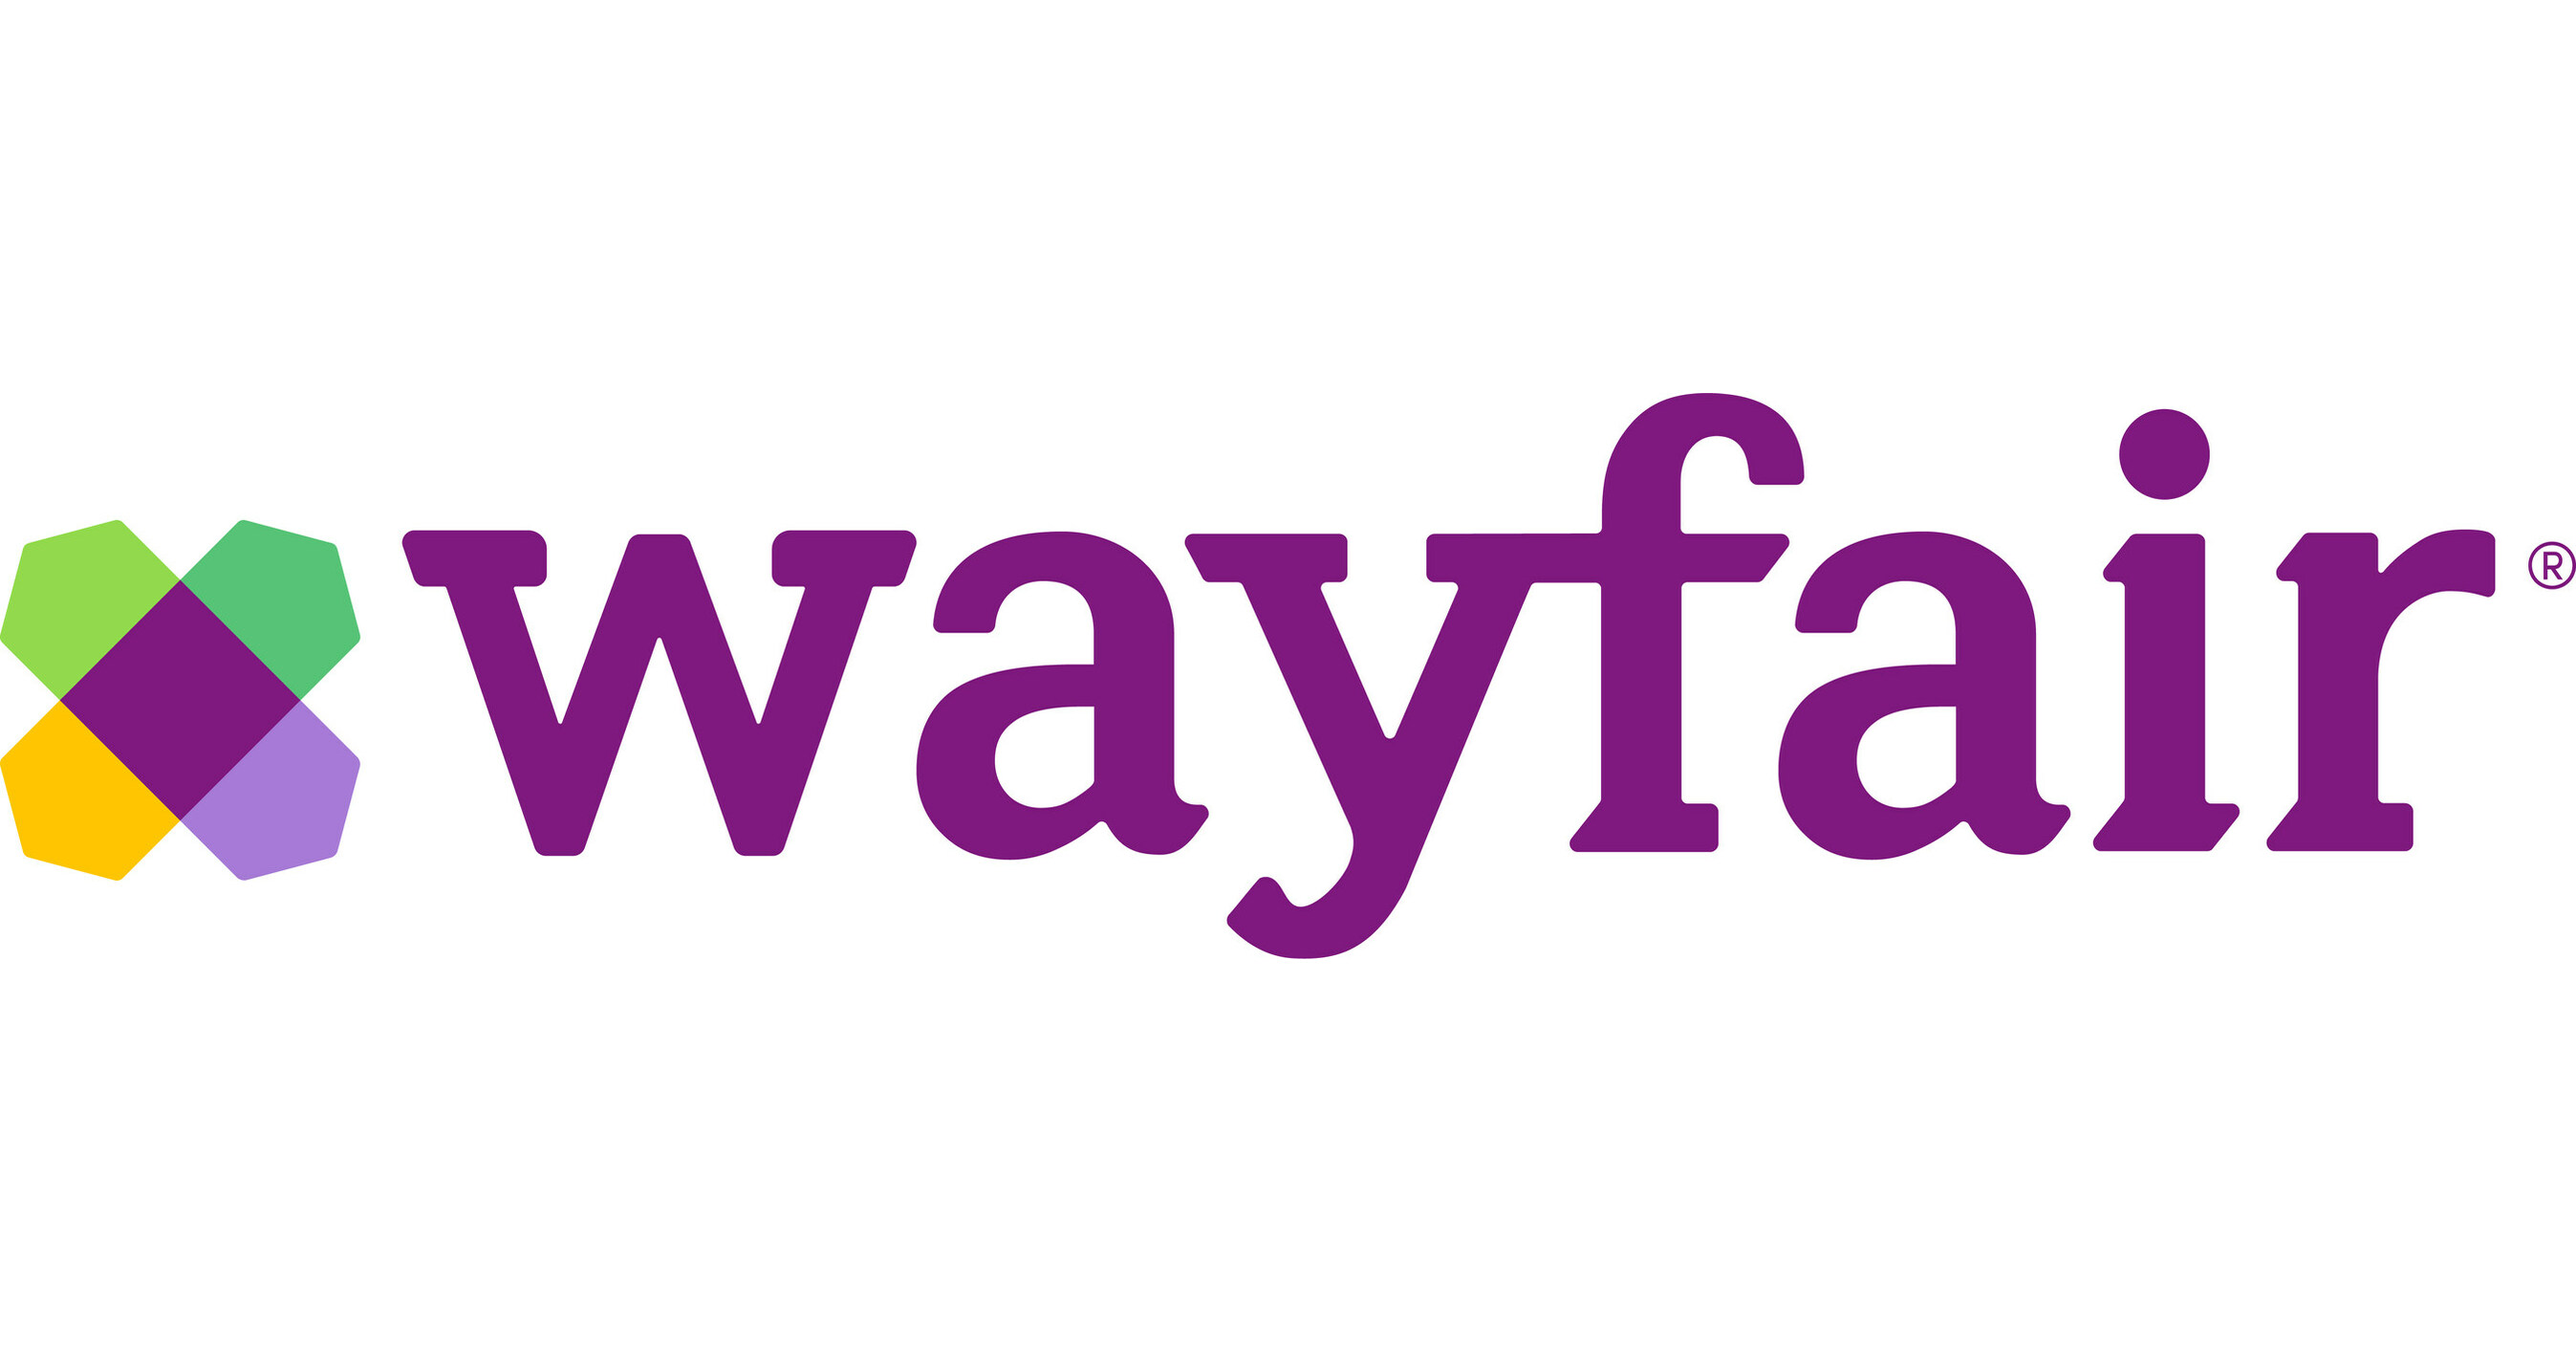 https://mma.prnewswire.com/media/2008141/Wayfair_Logo.jpg?p=facebook